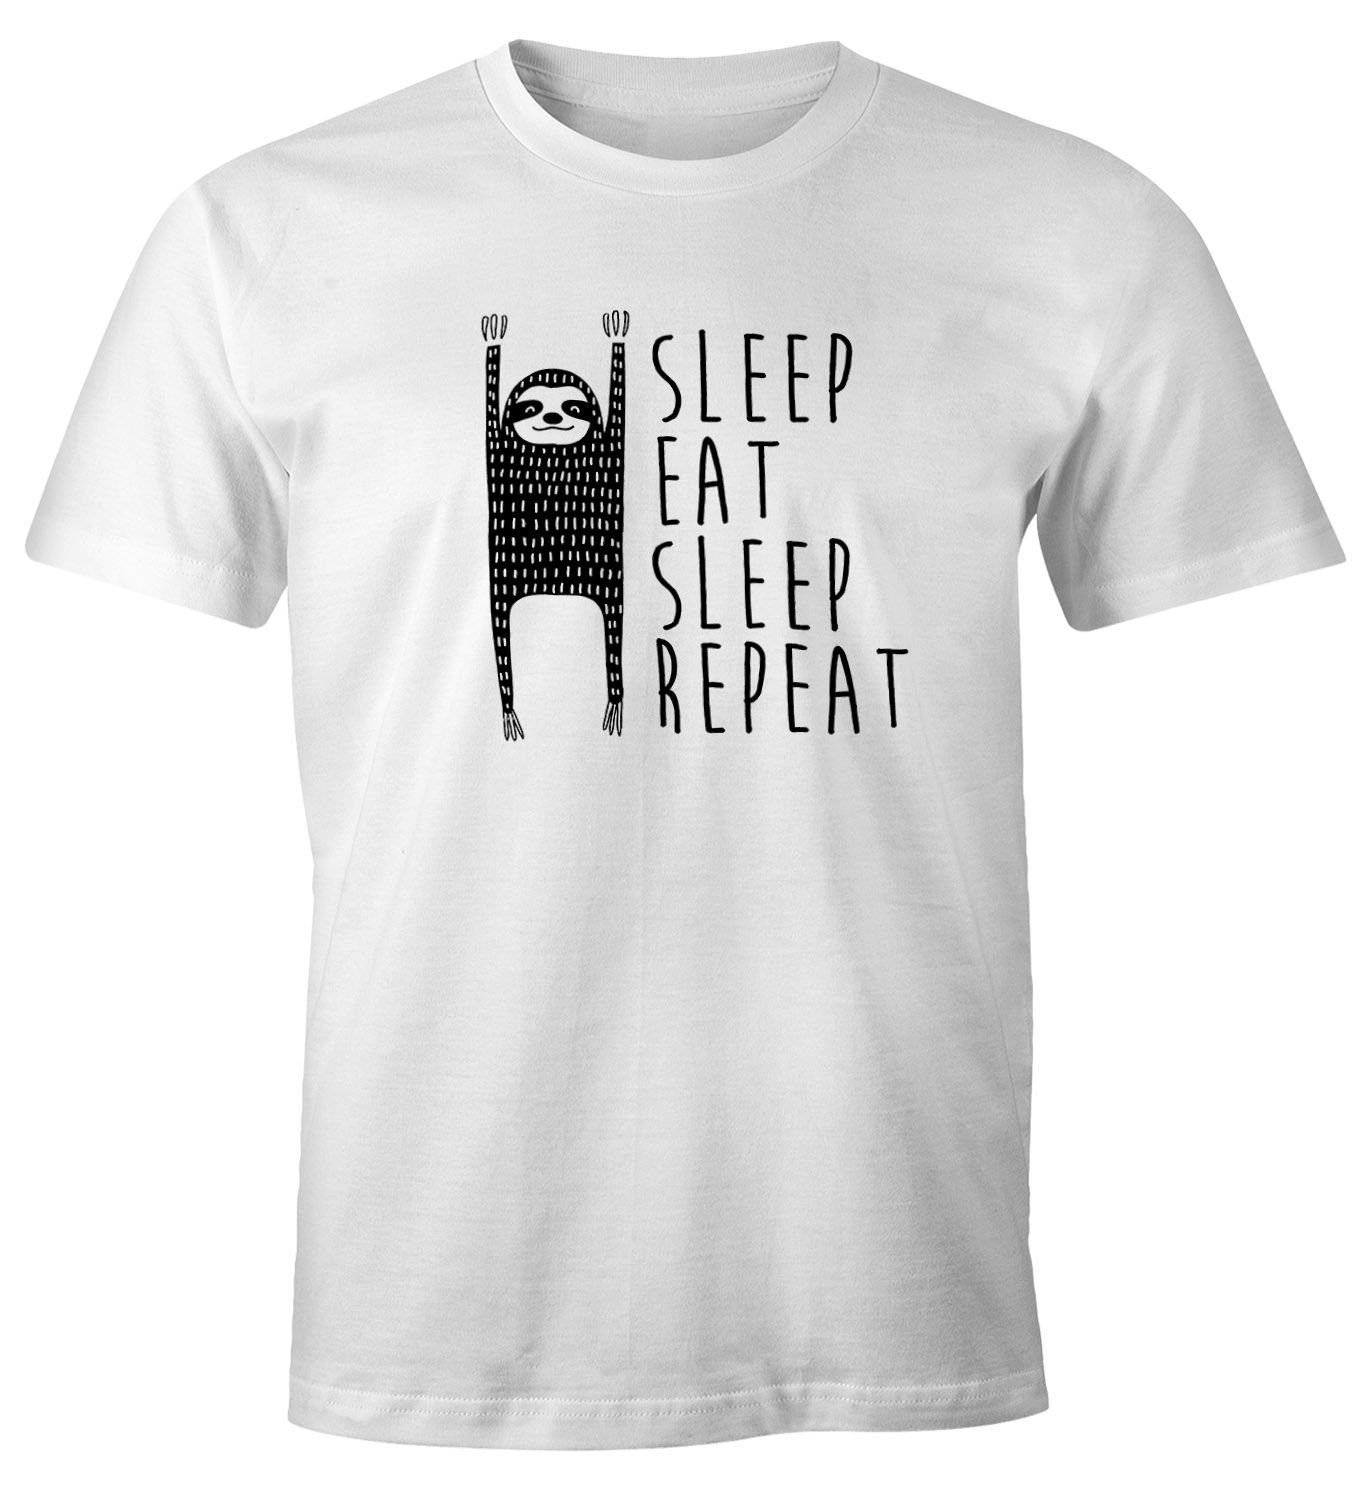 Print-Shirt Moonworks® Herren Eat Fun-Shirt T-Shirt Print MoonWorks Sleep Repeat mit Faultier Sleep lustiges